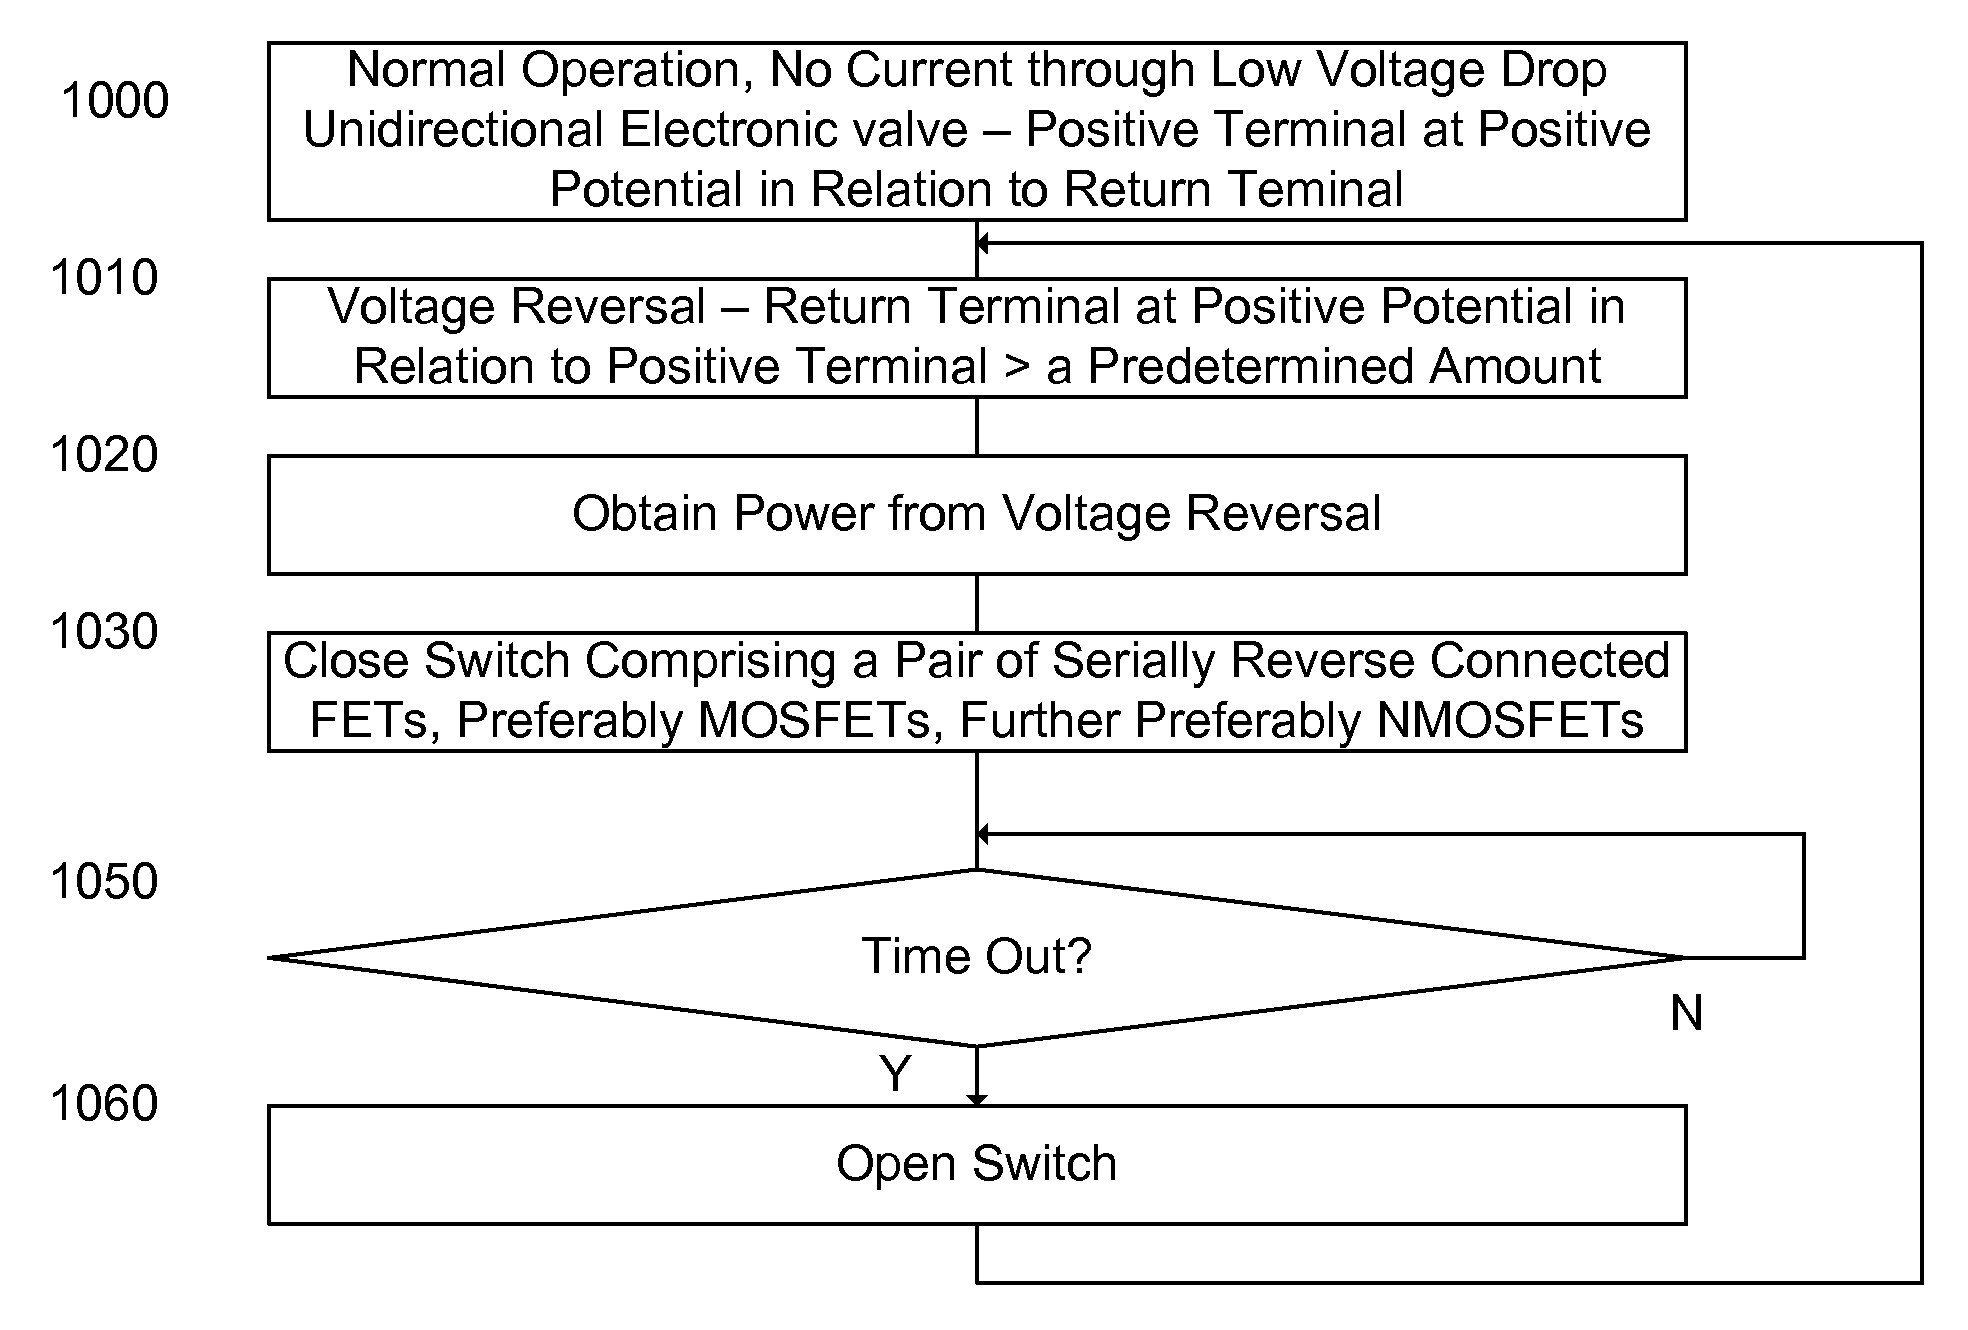 Low Voltage Drop Unidirectional Electronic Valve